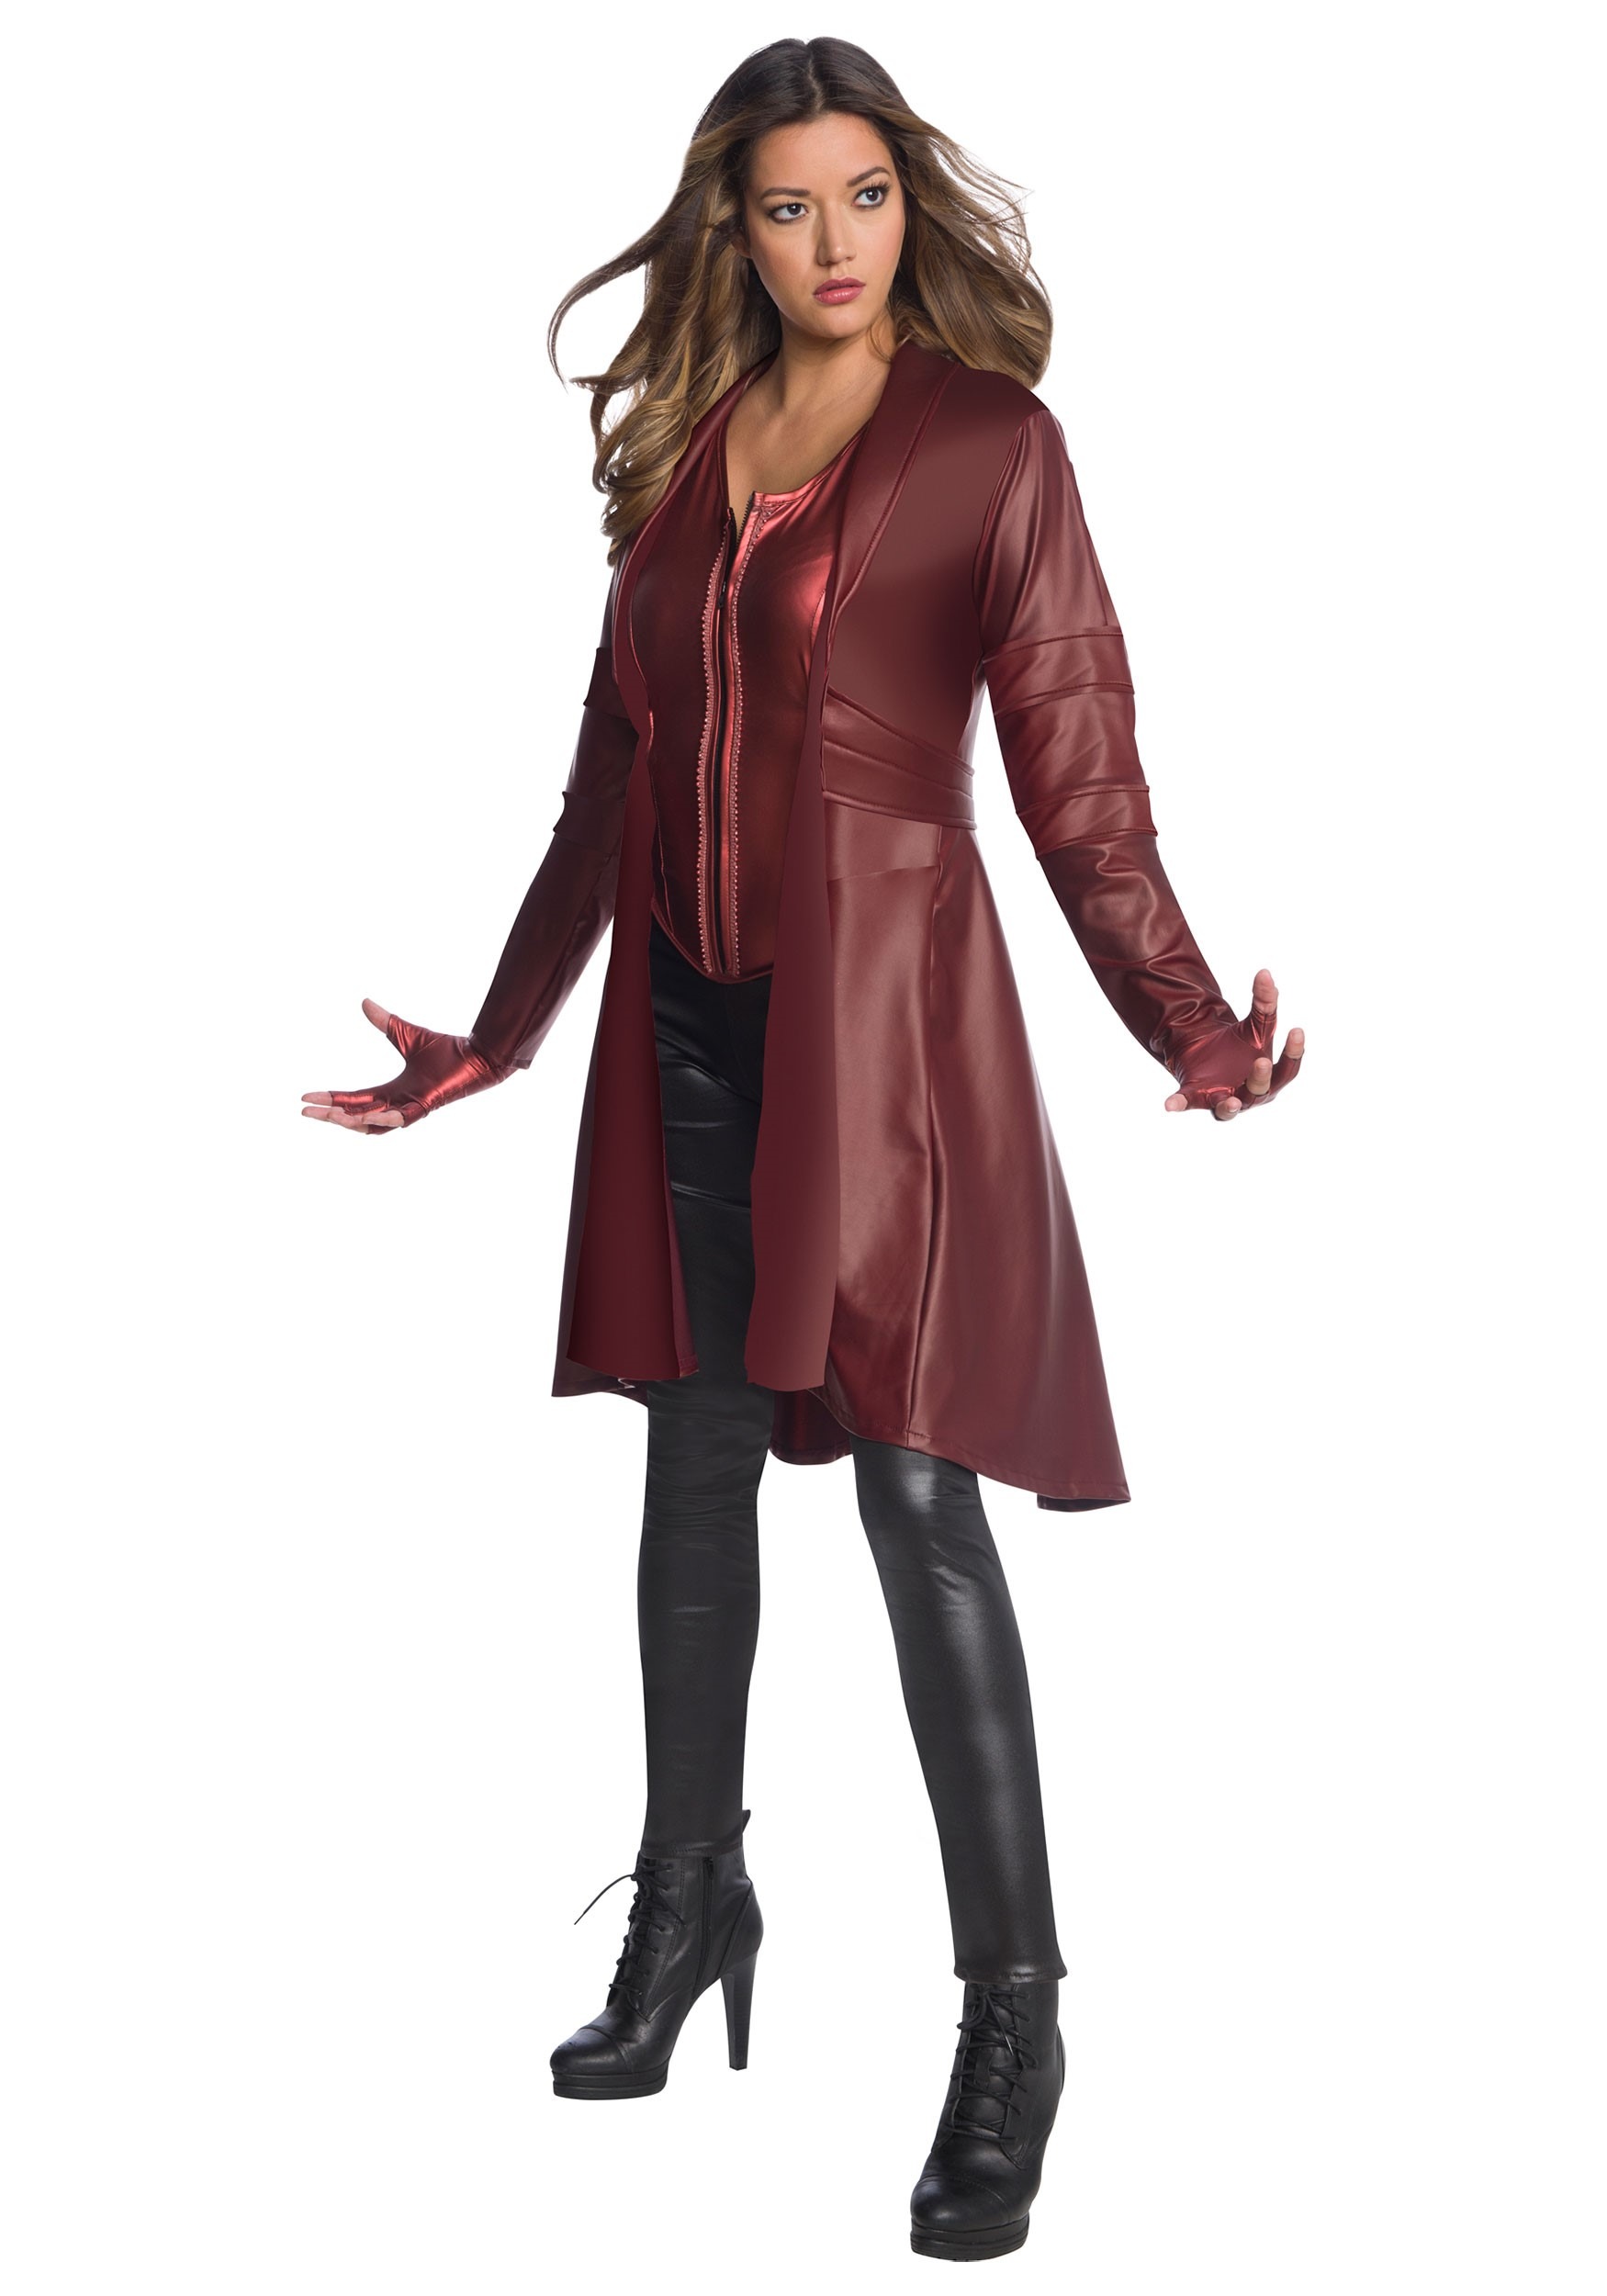 Avengers Endgame Secret Wishes Scarlet Witch Women's Fancy Dress Costume